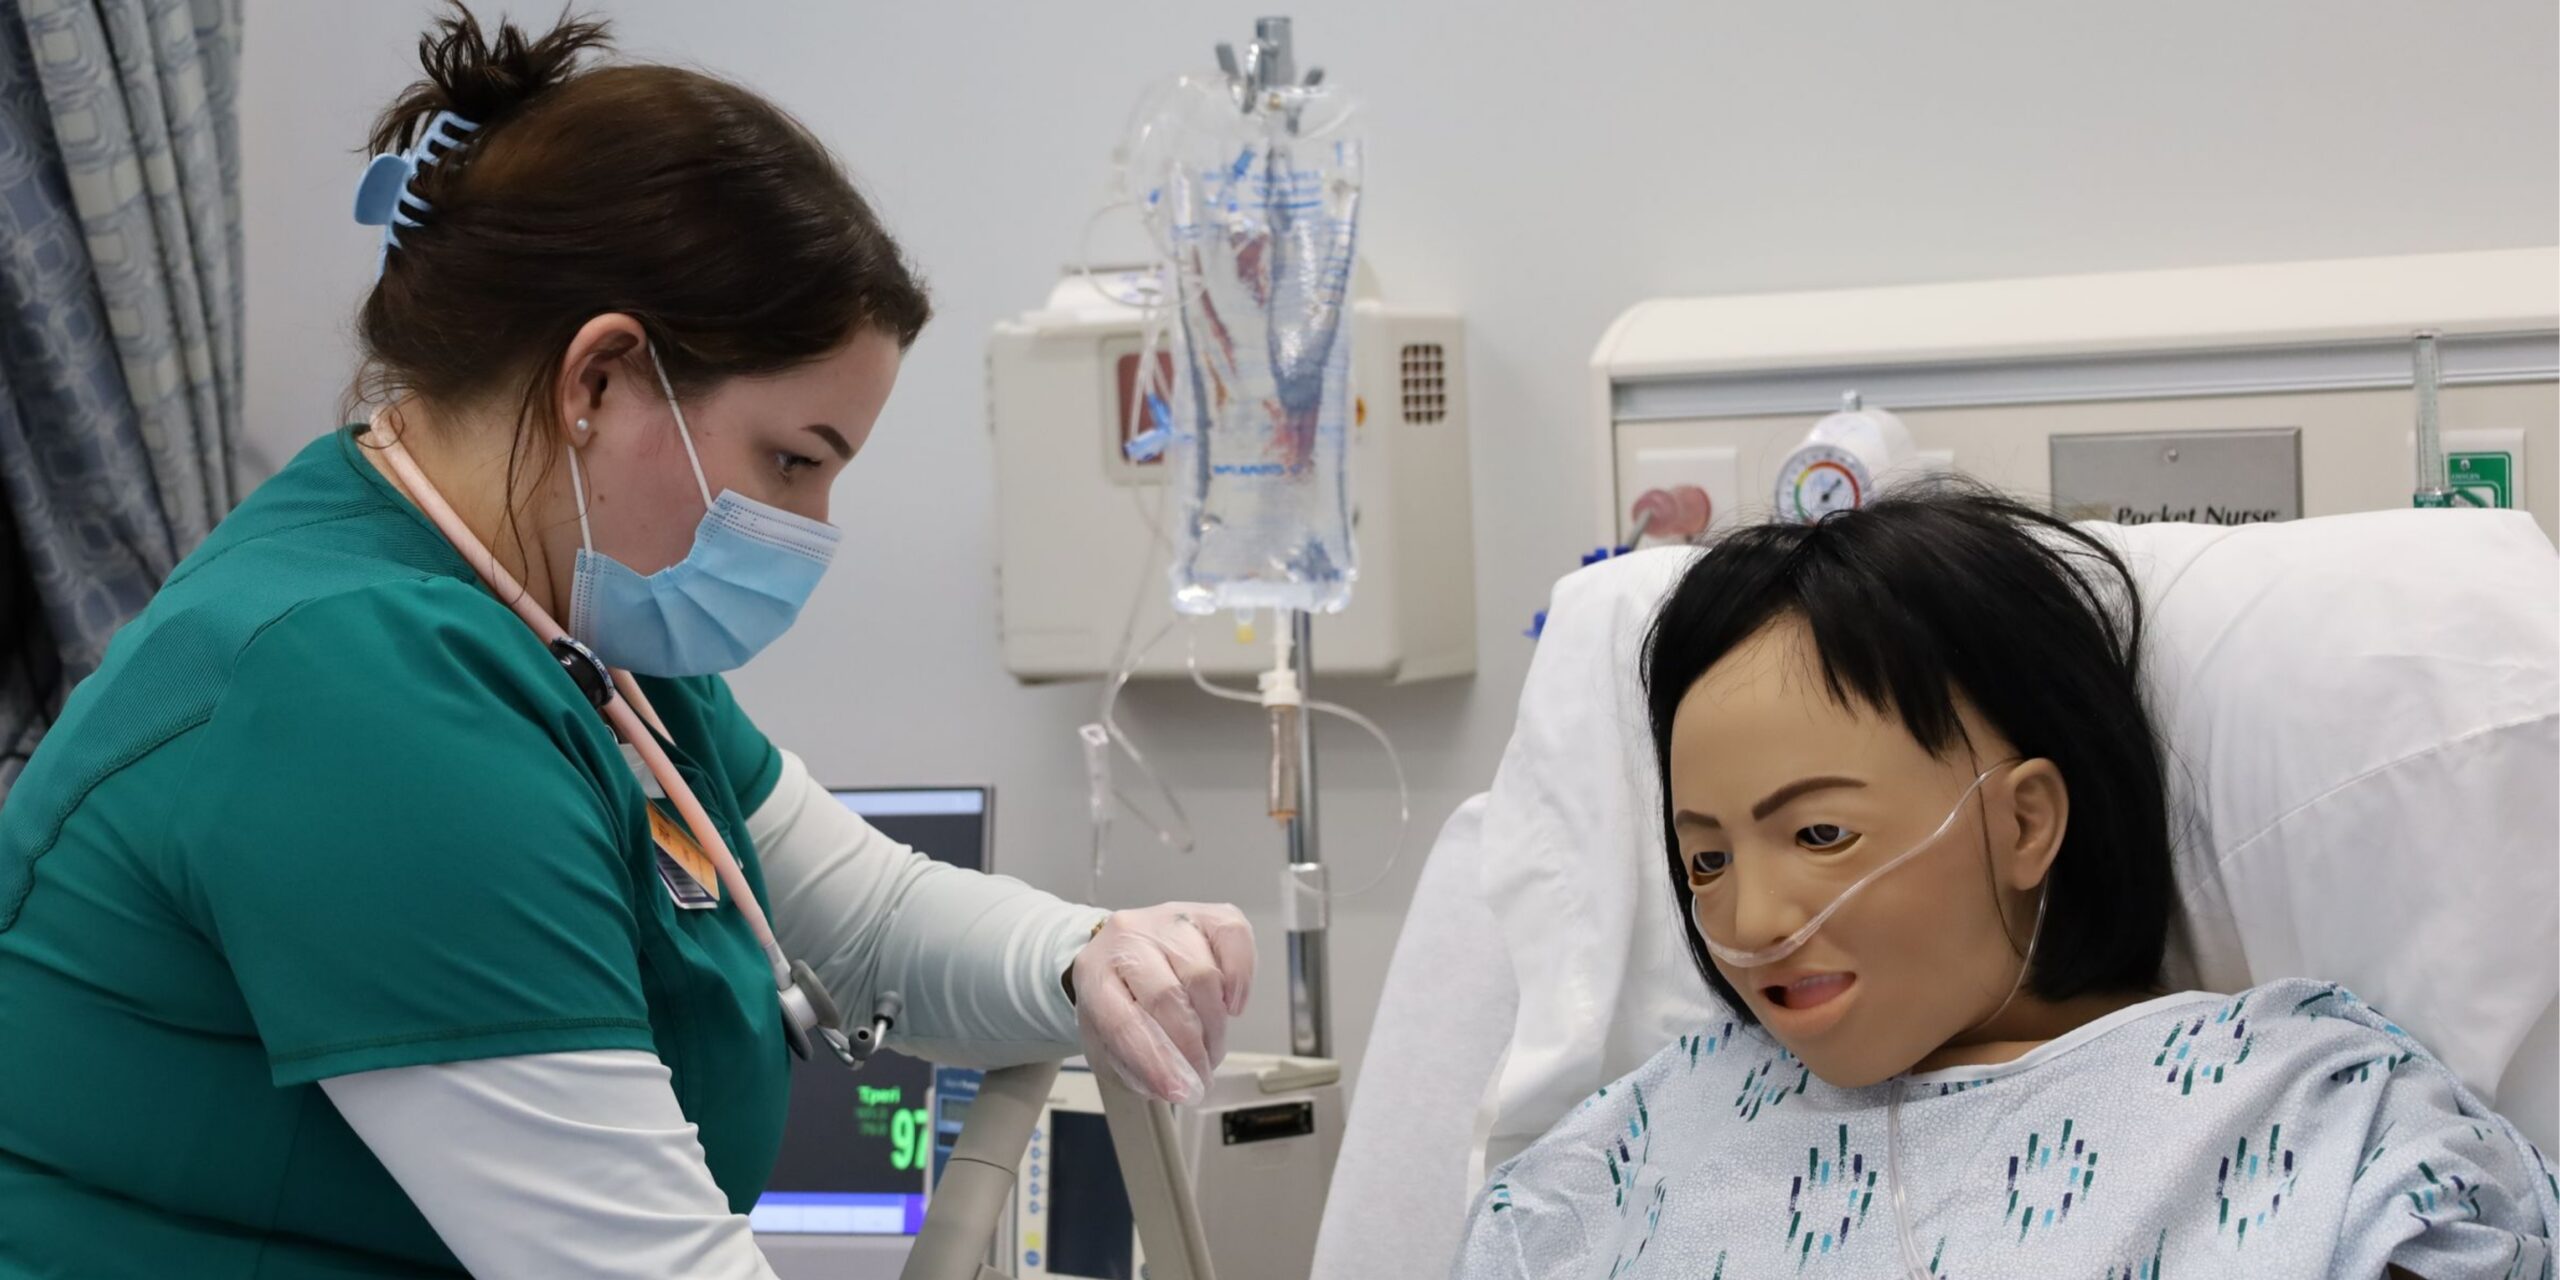 nursing student checking vitals on simulation doll